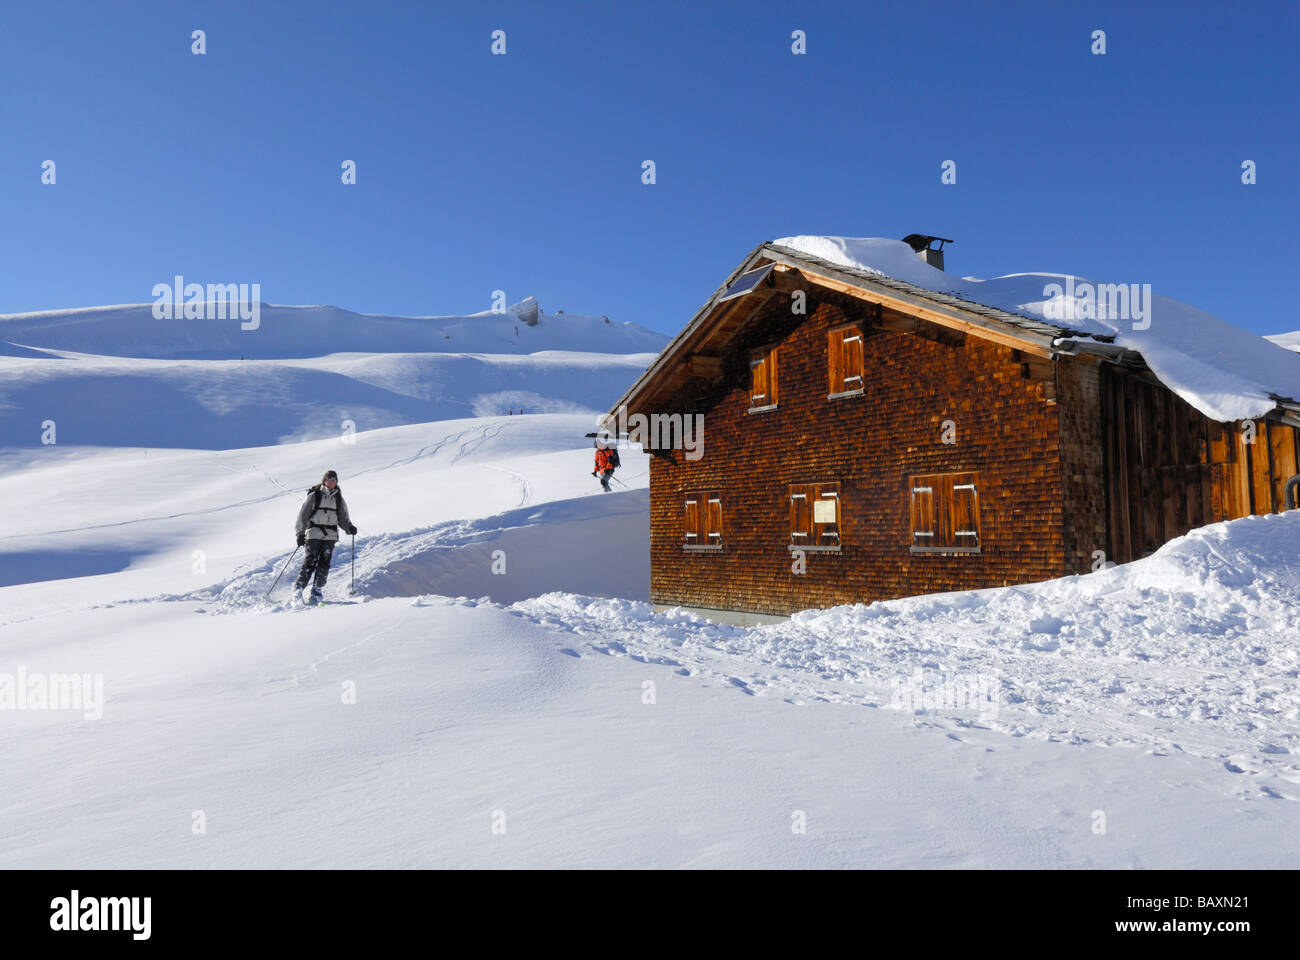 skiers arriving at snow-covered alpine hut, Schwarzwassertal, Kleinwalsertal, Allgaeu range, Allgaeu, Vorarlberg, Austria Stock Photo